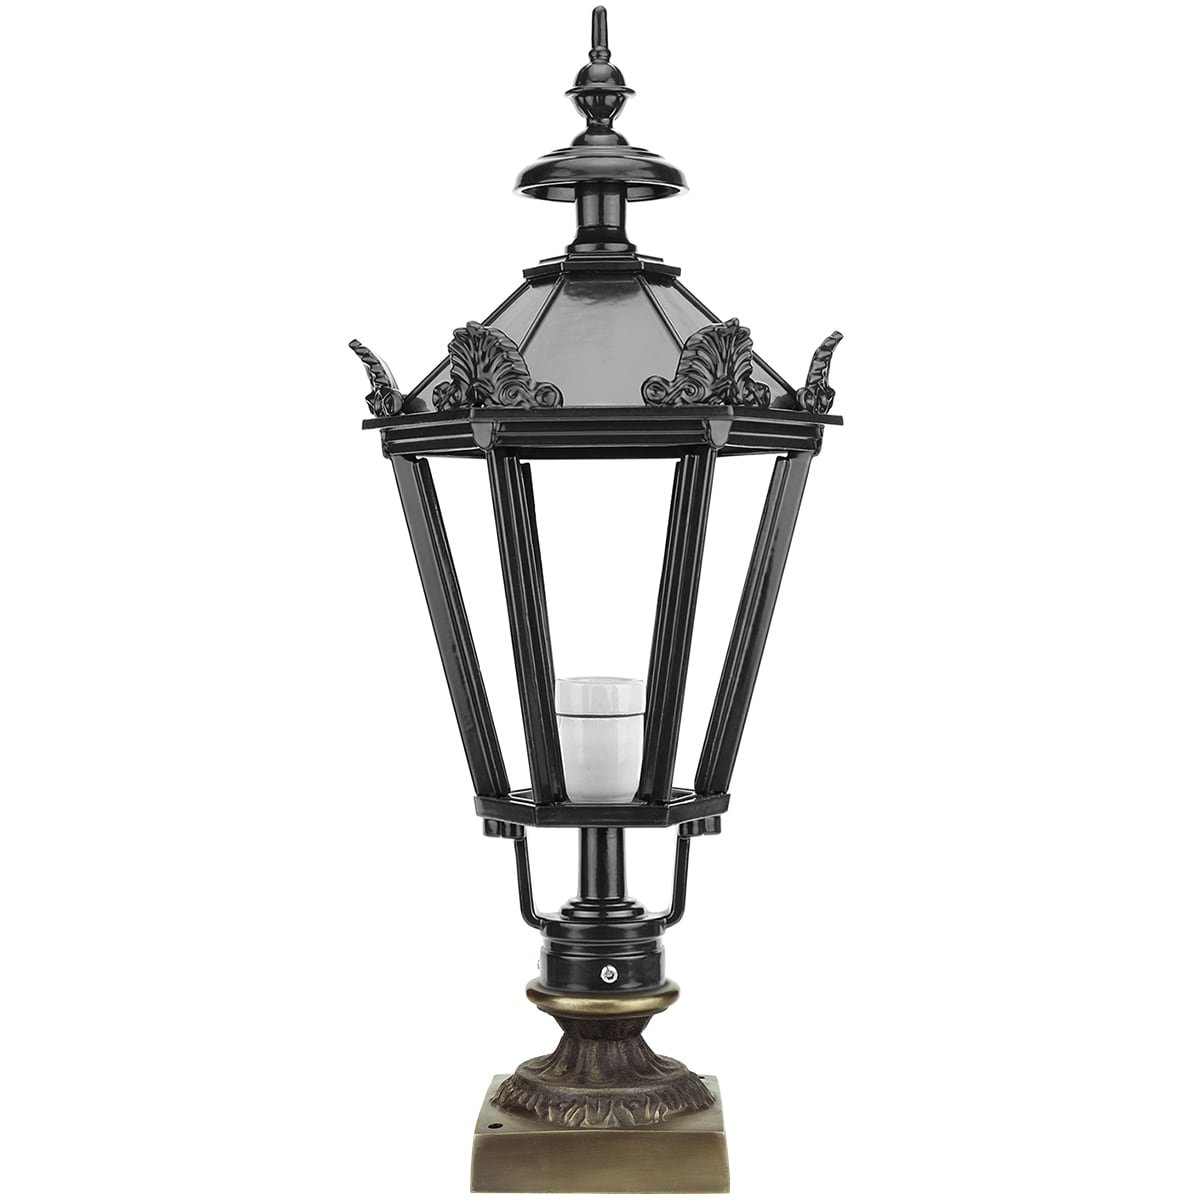 Udendørslampe rustik Agelo bronze - 73 cm